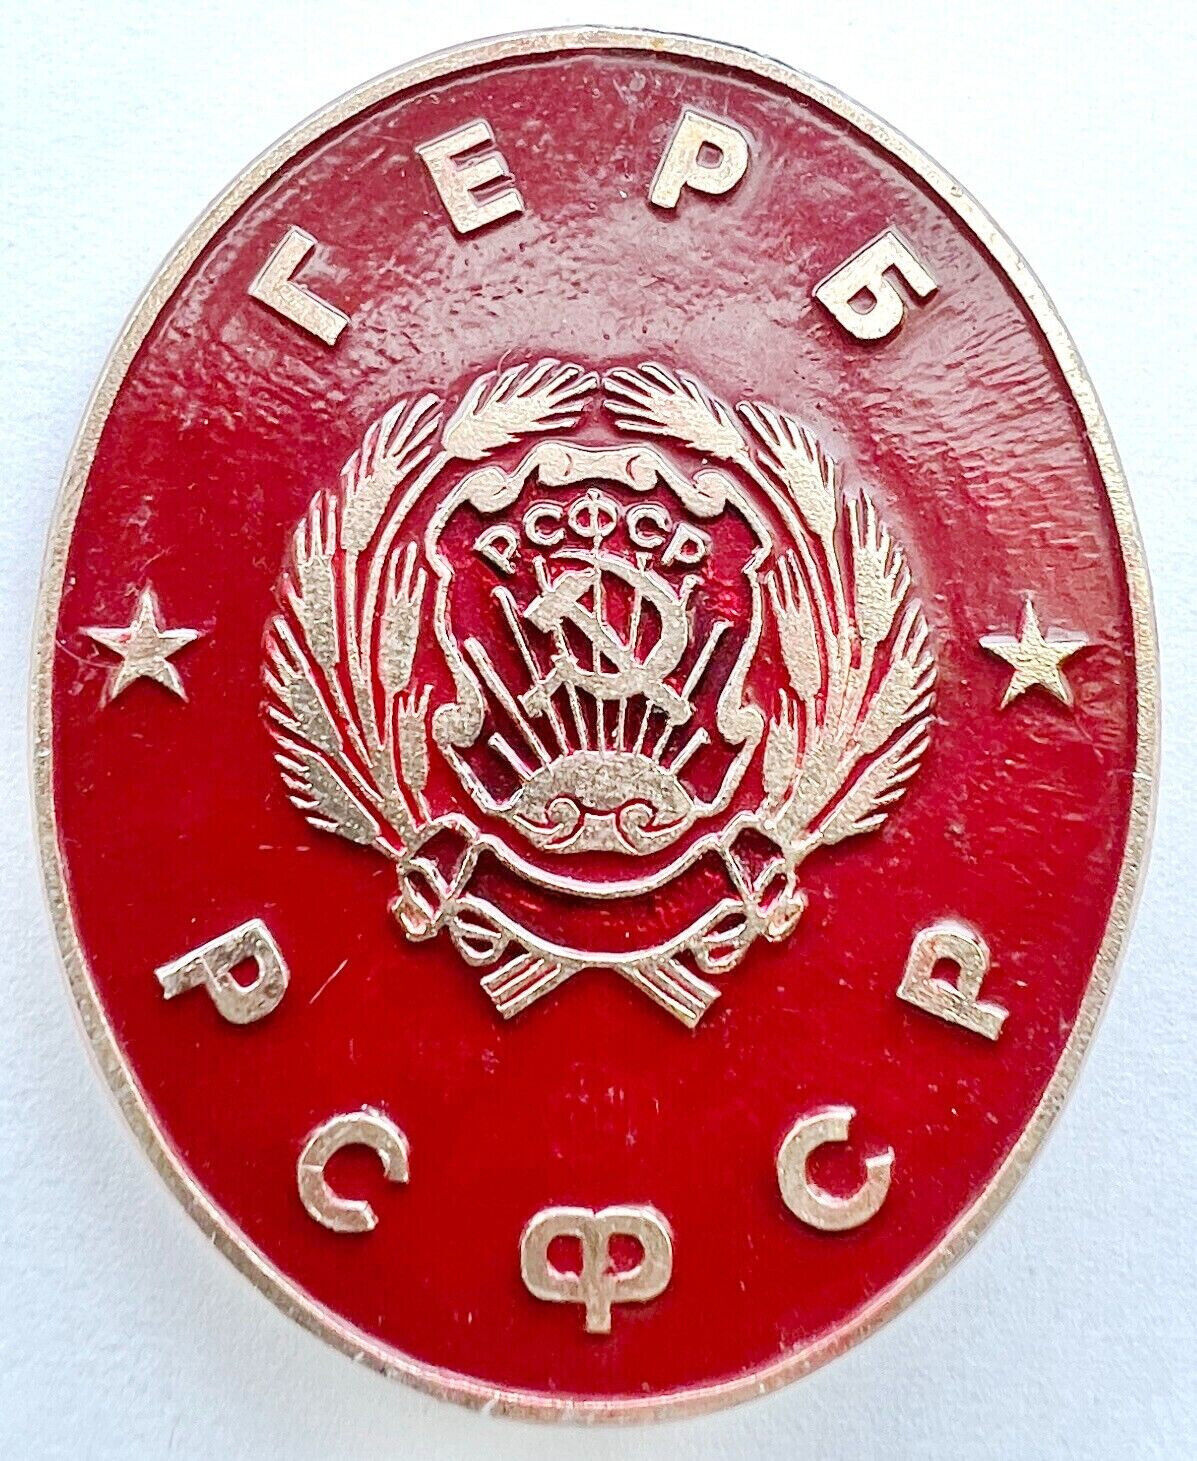 USSR PIN. RSFSR COAT OF ARMS EMBLEM RUSSIAN SOVIET FEDERATIVE SOCIALIST REPUBLIC